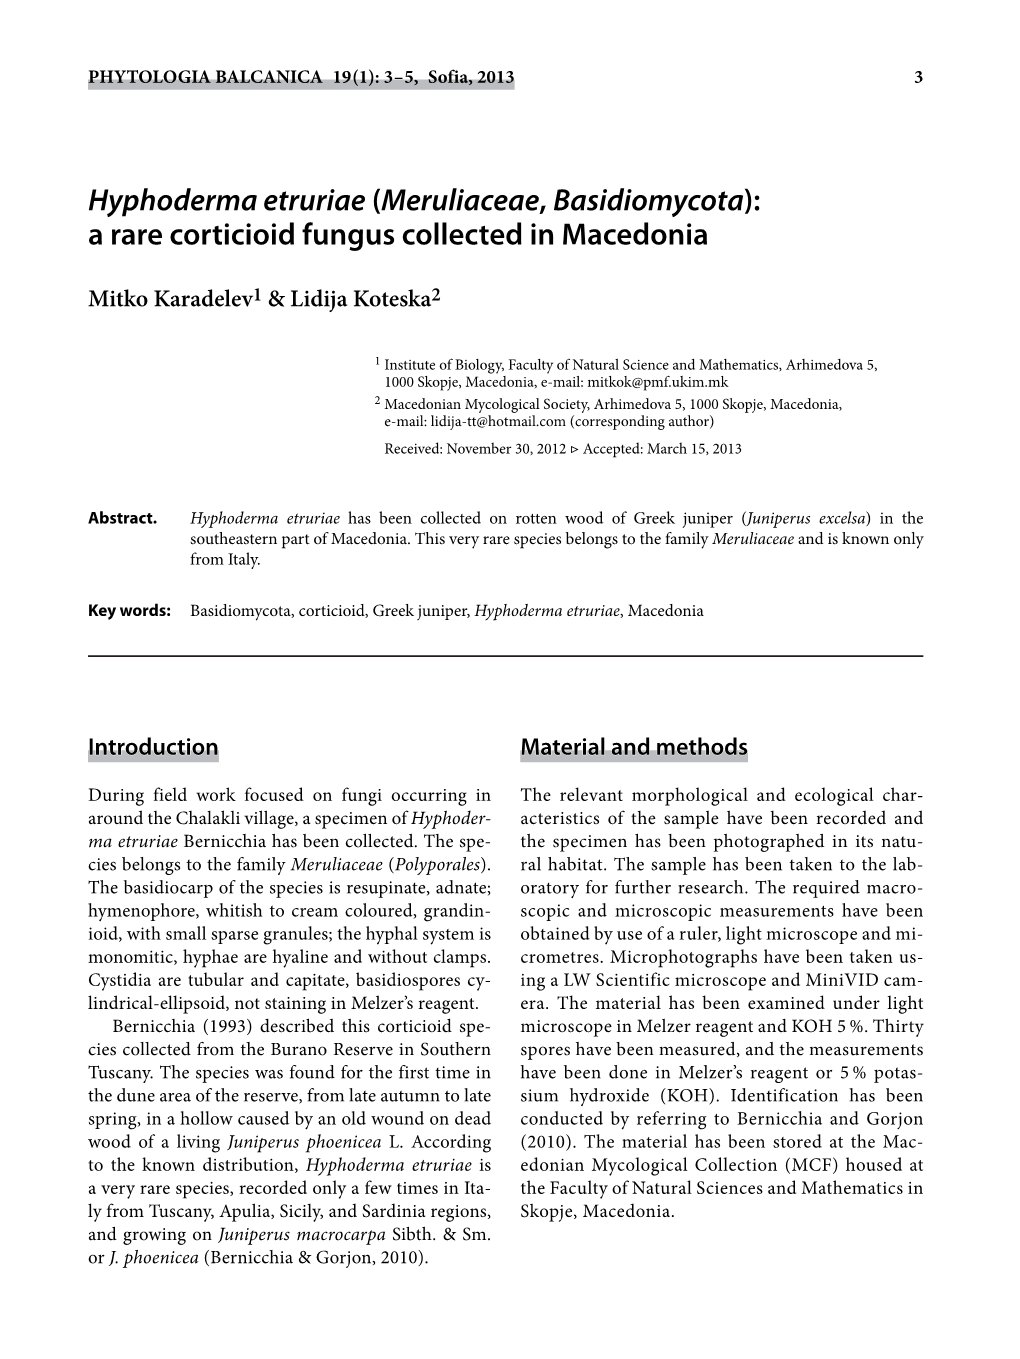 Hyphoderma Etruriae (Meruliaceae, Basidiomycota): a Rare Corticioid Fungus Collected in Macedonia